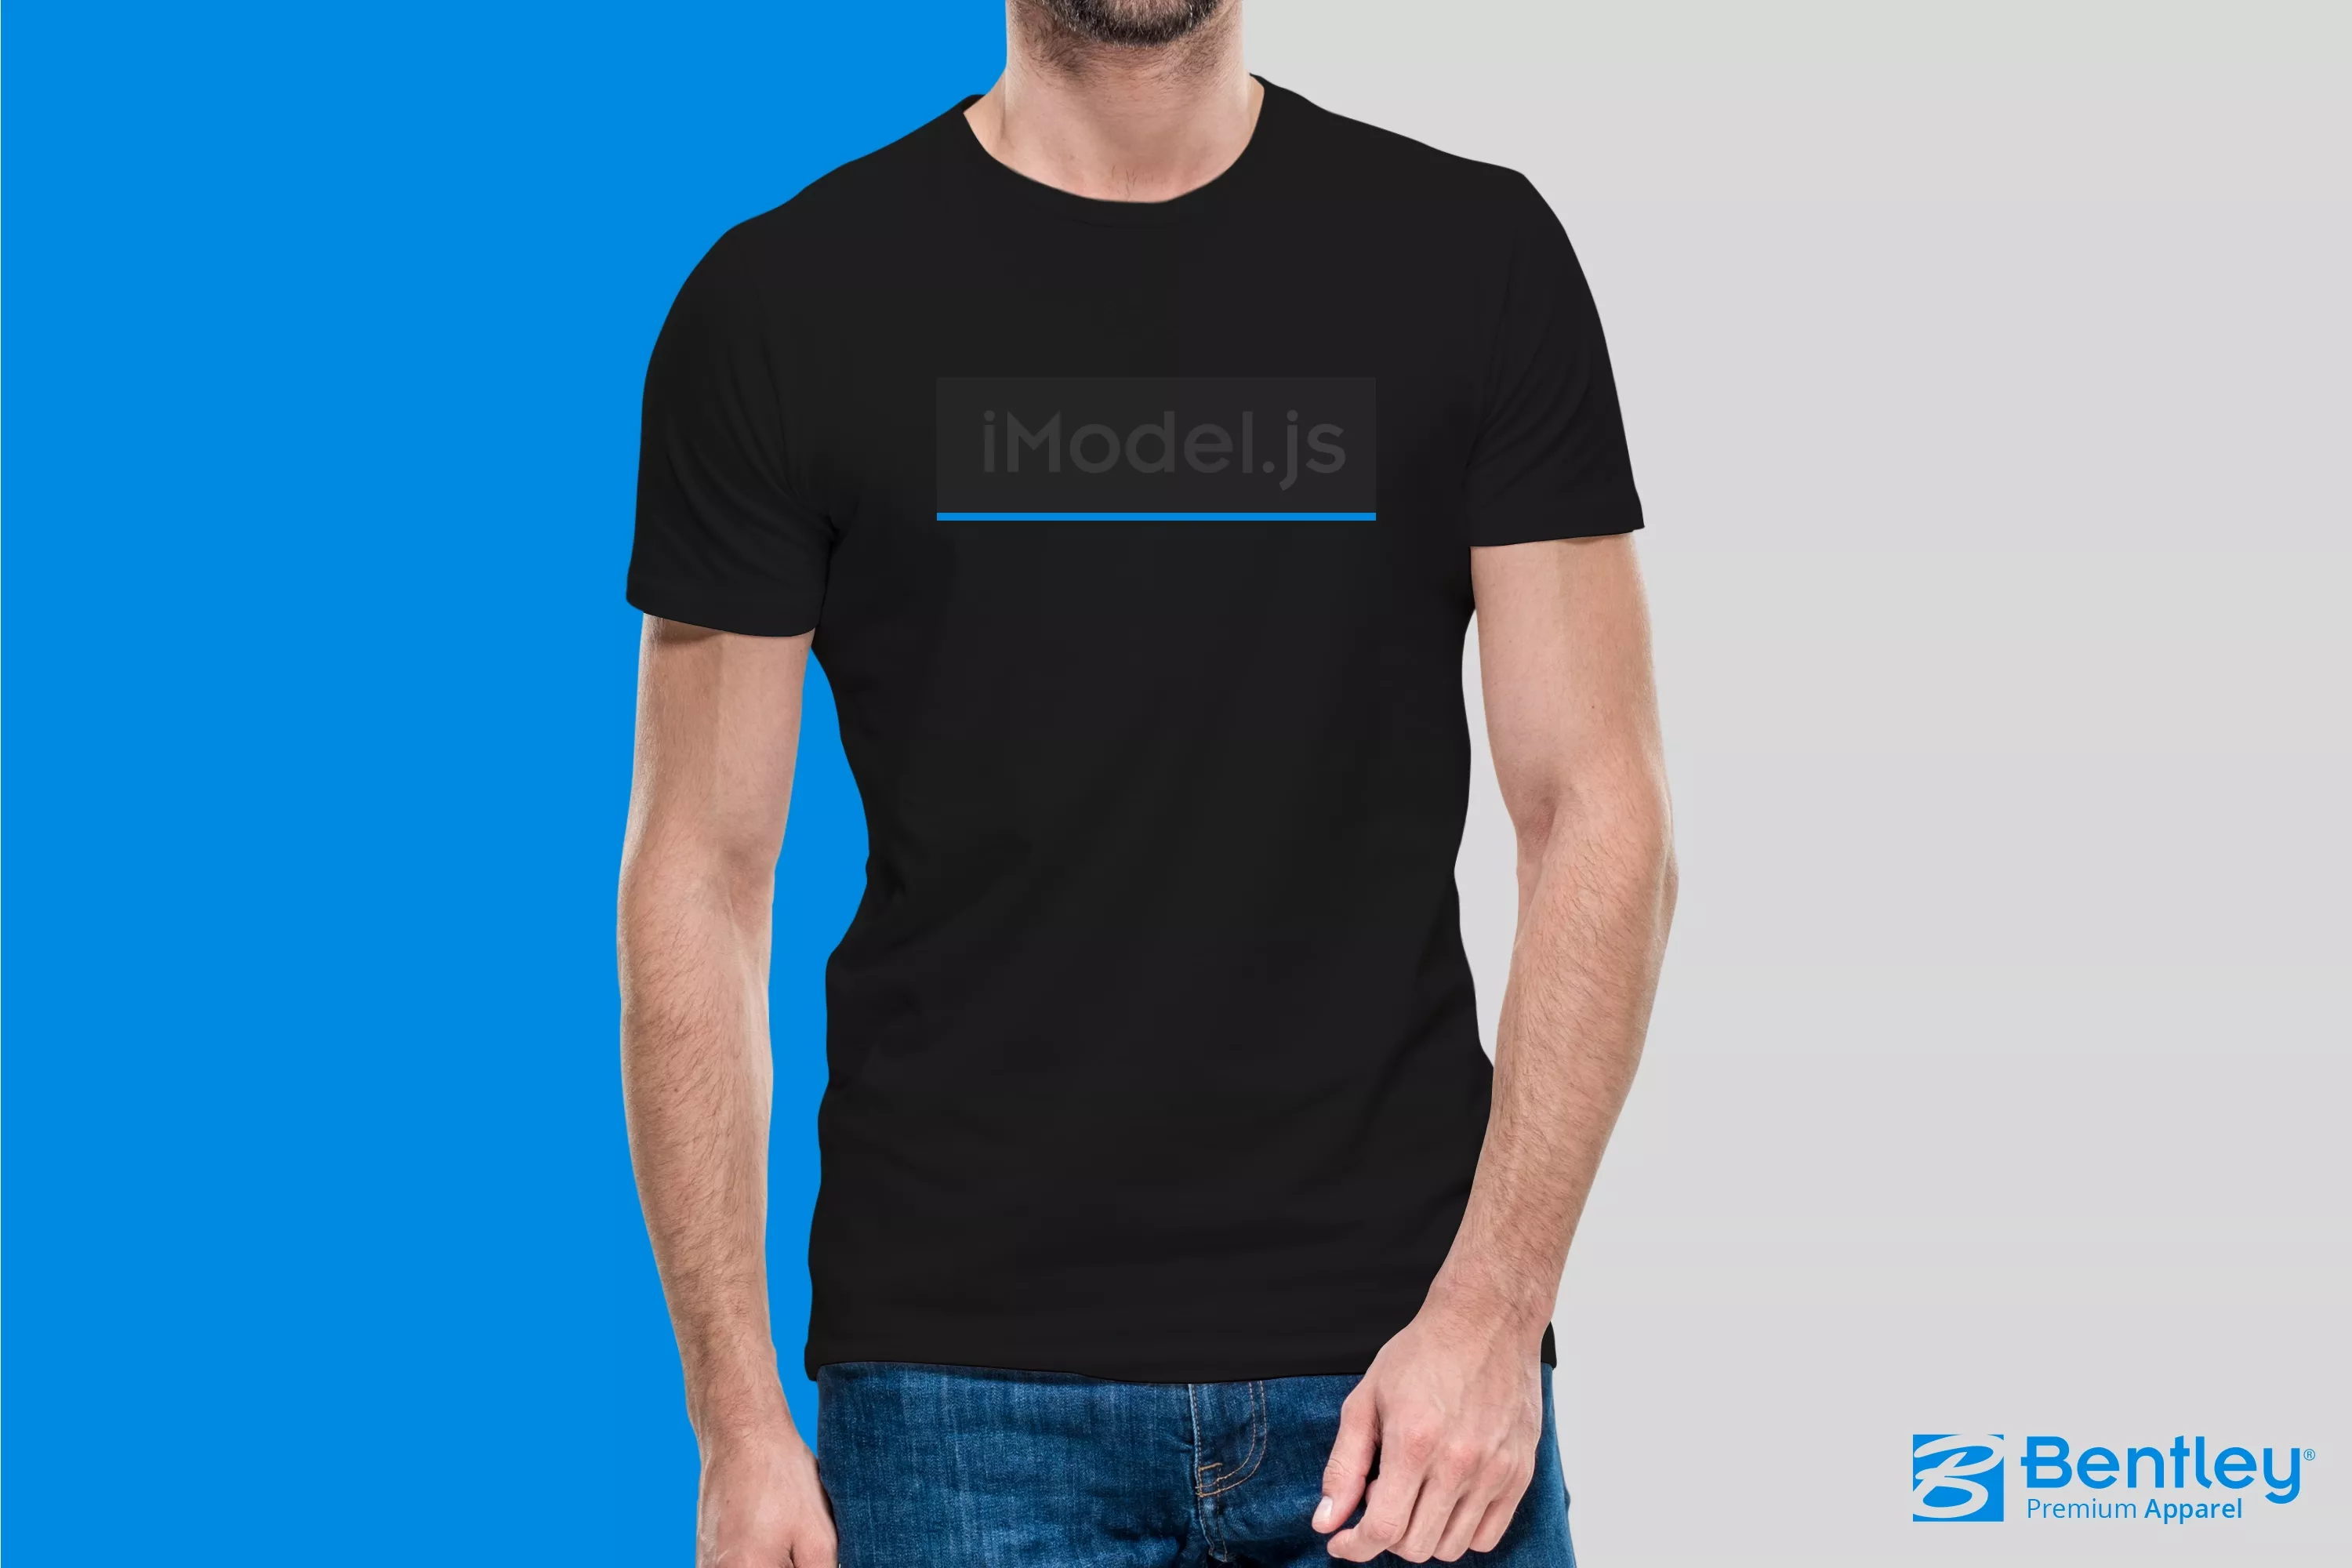 iModeljs t-shirt mockup 2.